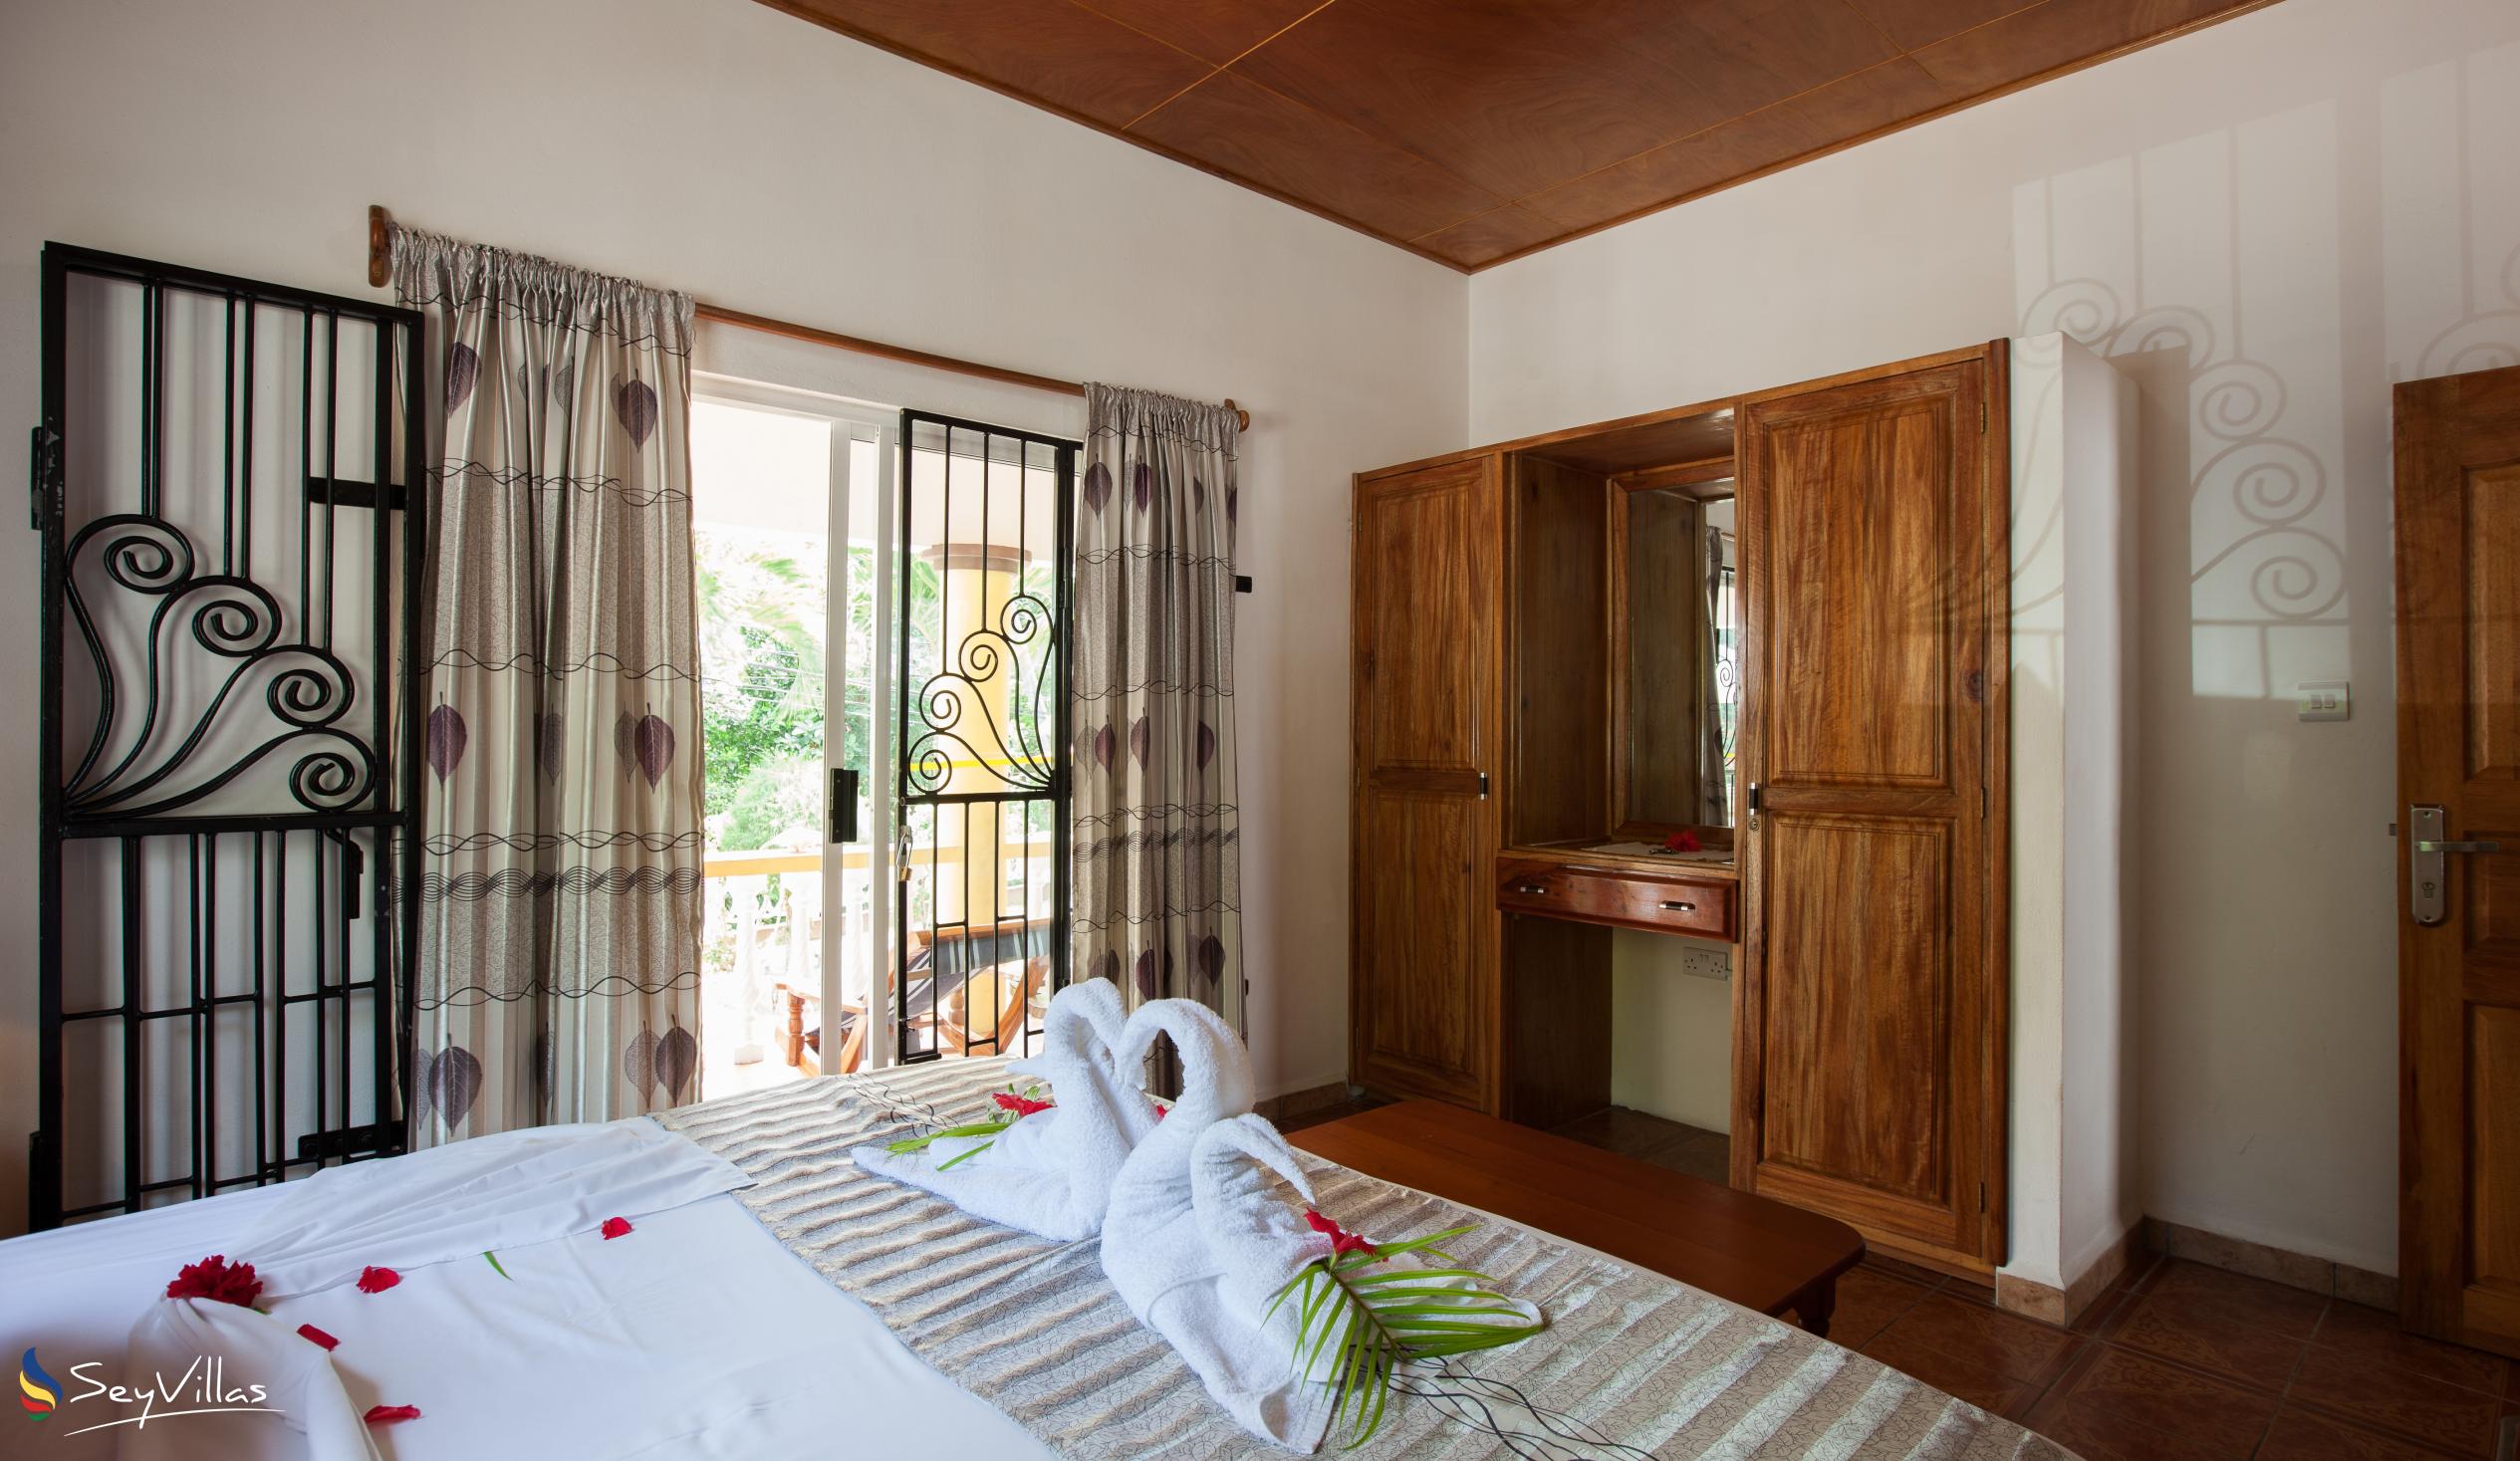 Foto 43: Acquario Villa - Appartement avec 2 chambres - Praslin (Seychelles)